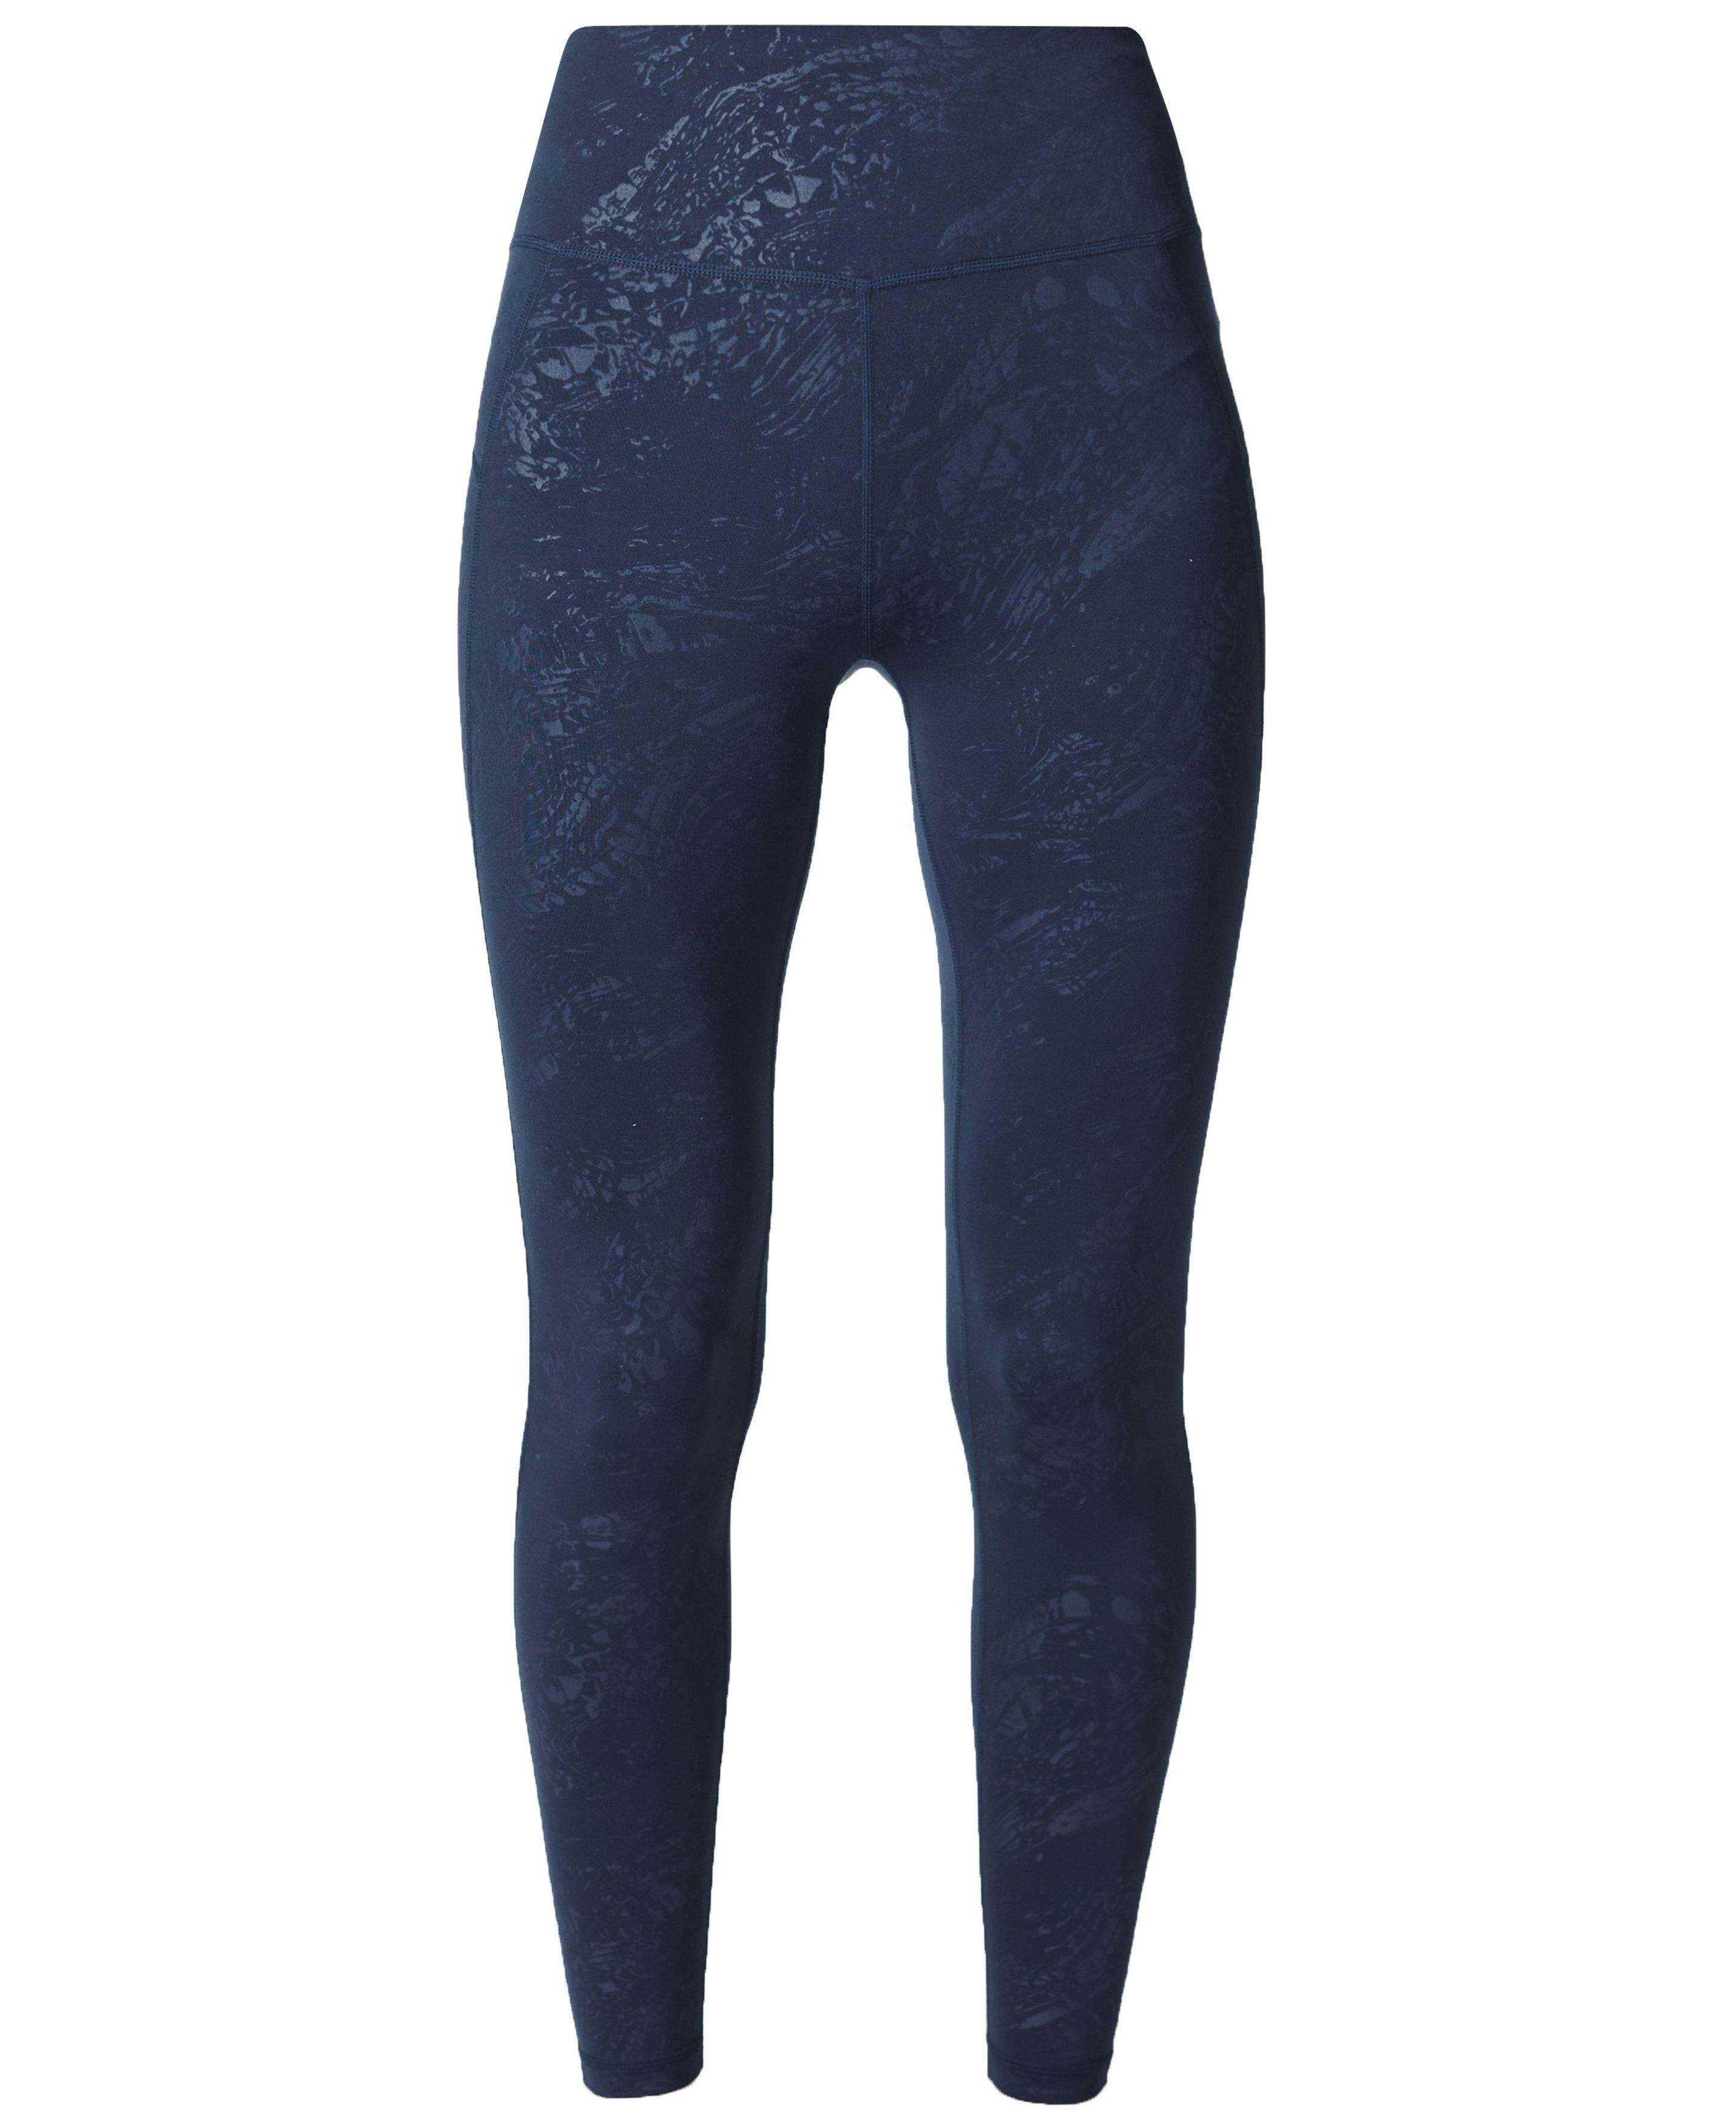 TOIVOTUKSIA Navy Blue Solid Activewear Brand Leggings Women